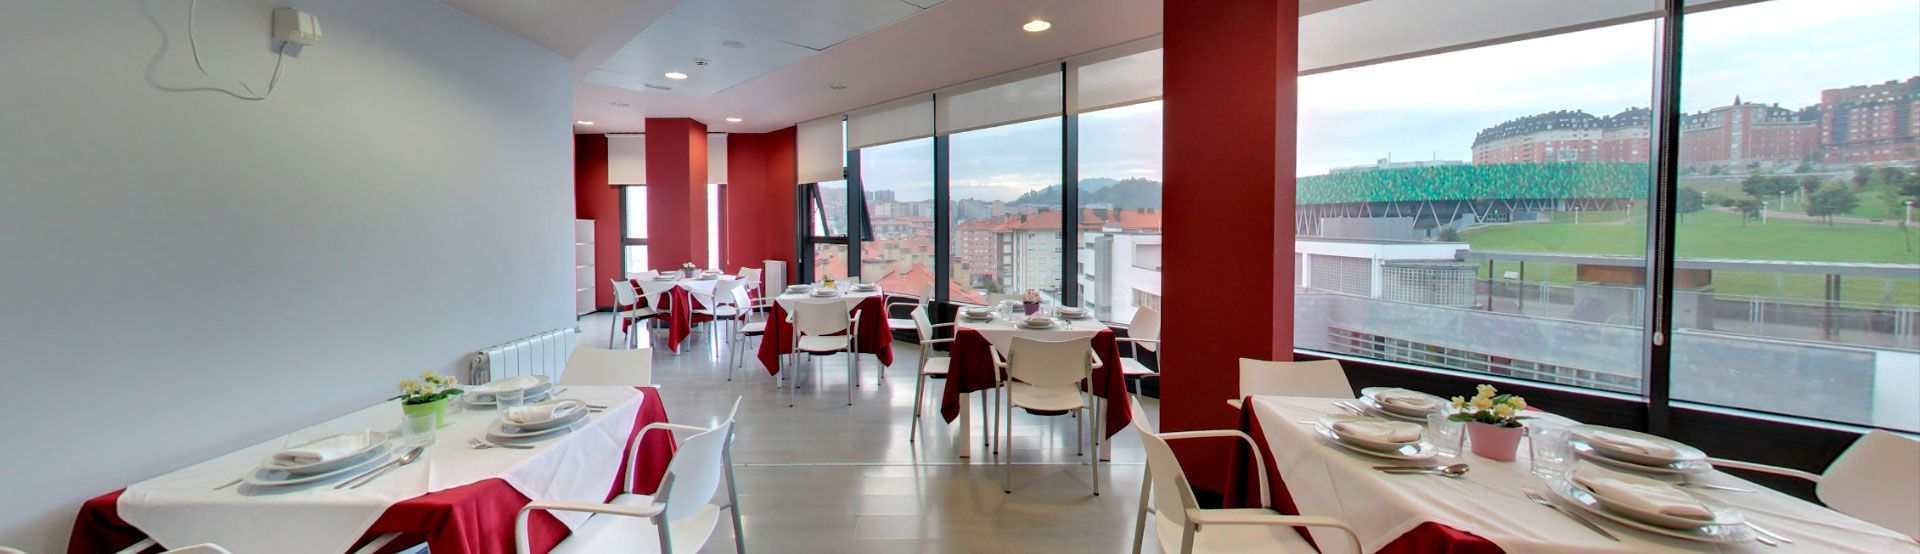 Residencia para mayores en el centro urbano de Bilbao - Residencia de ancianos Bizkaia